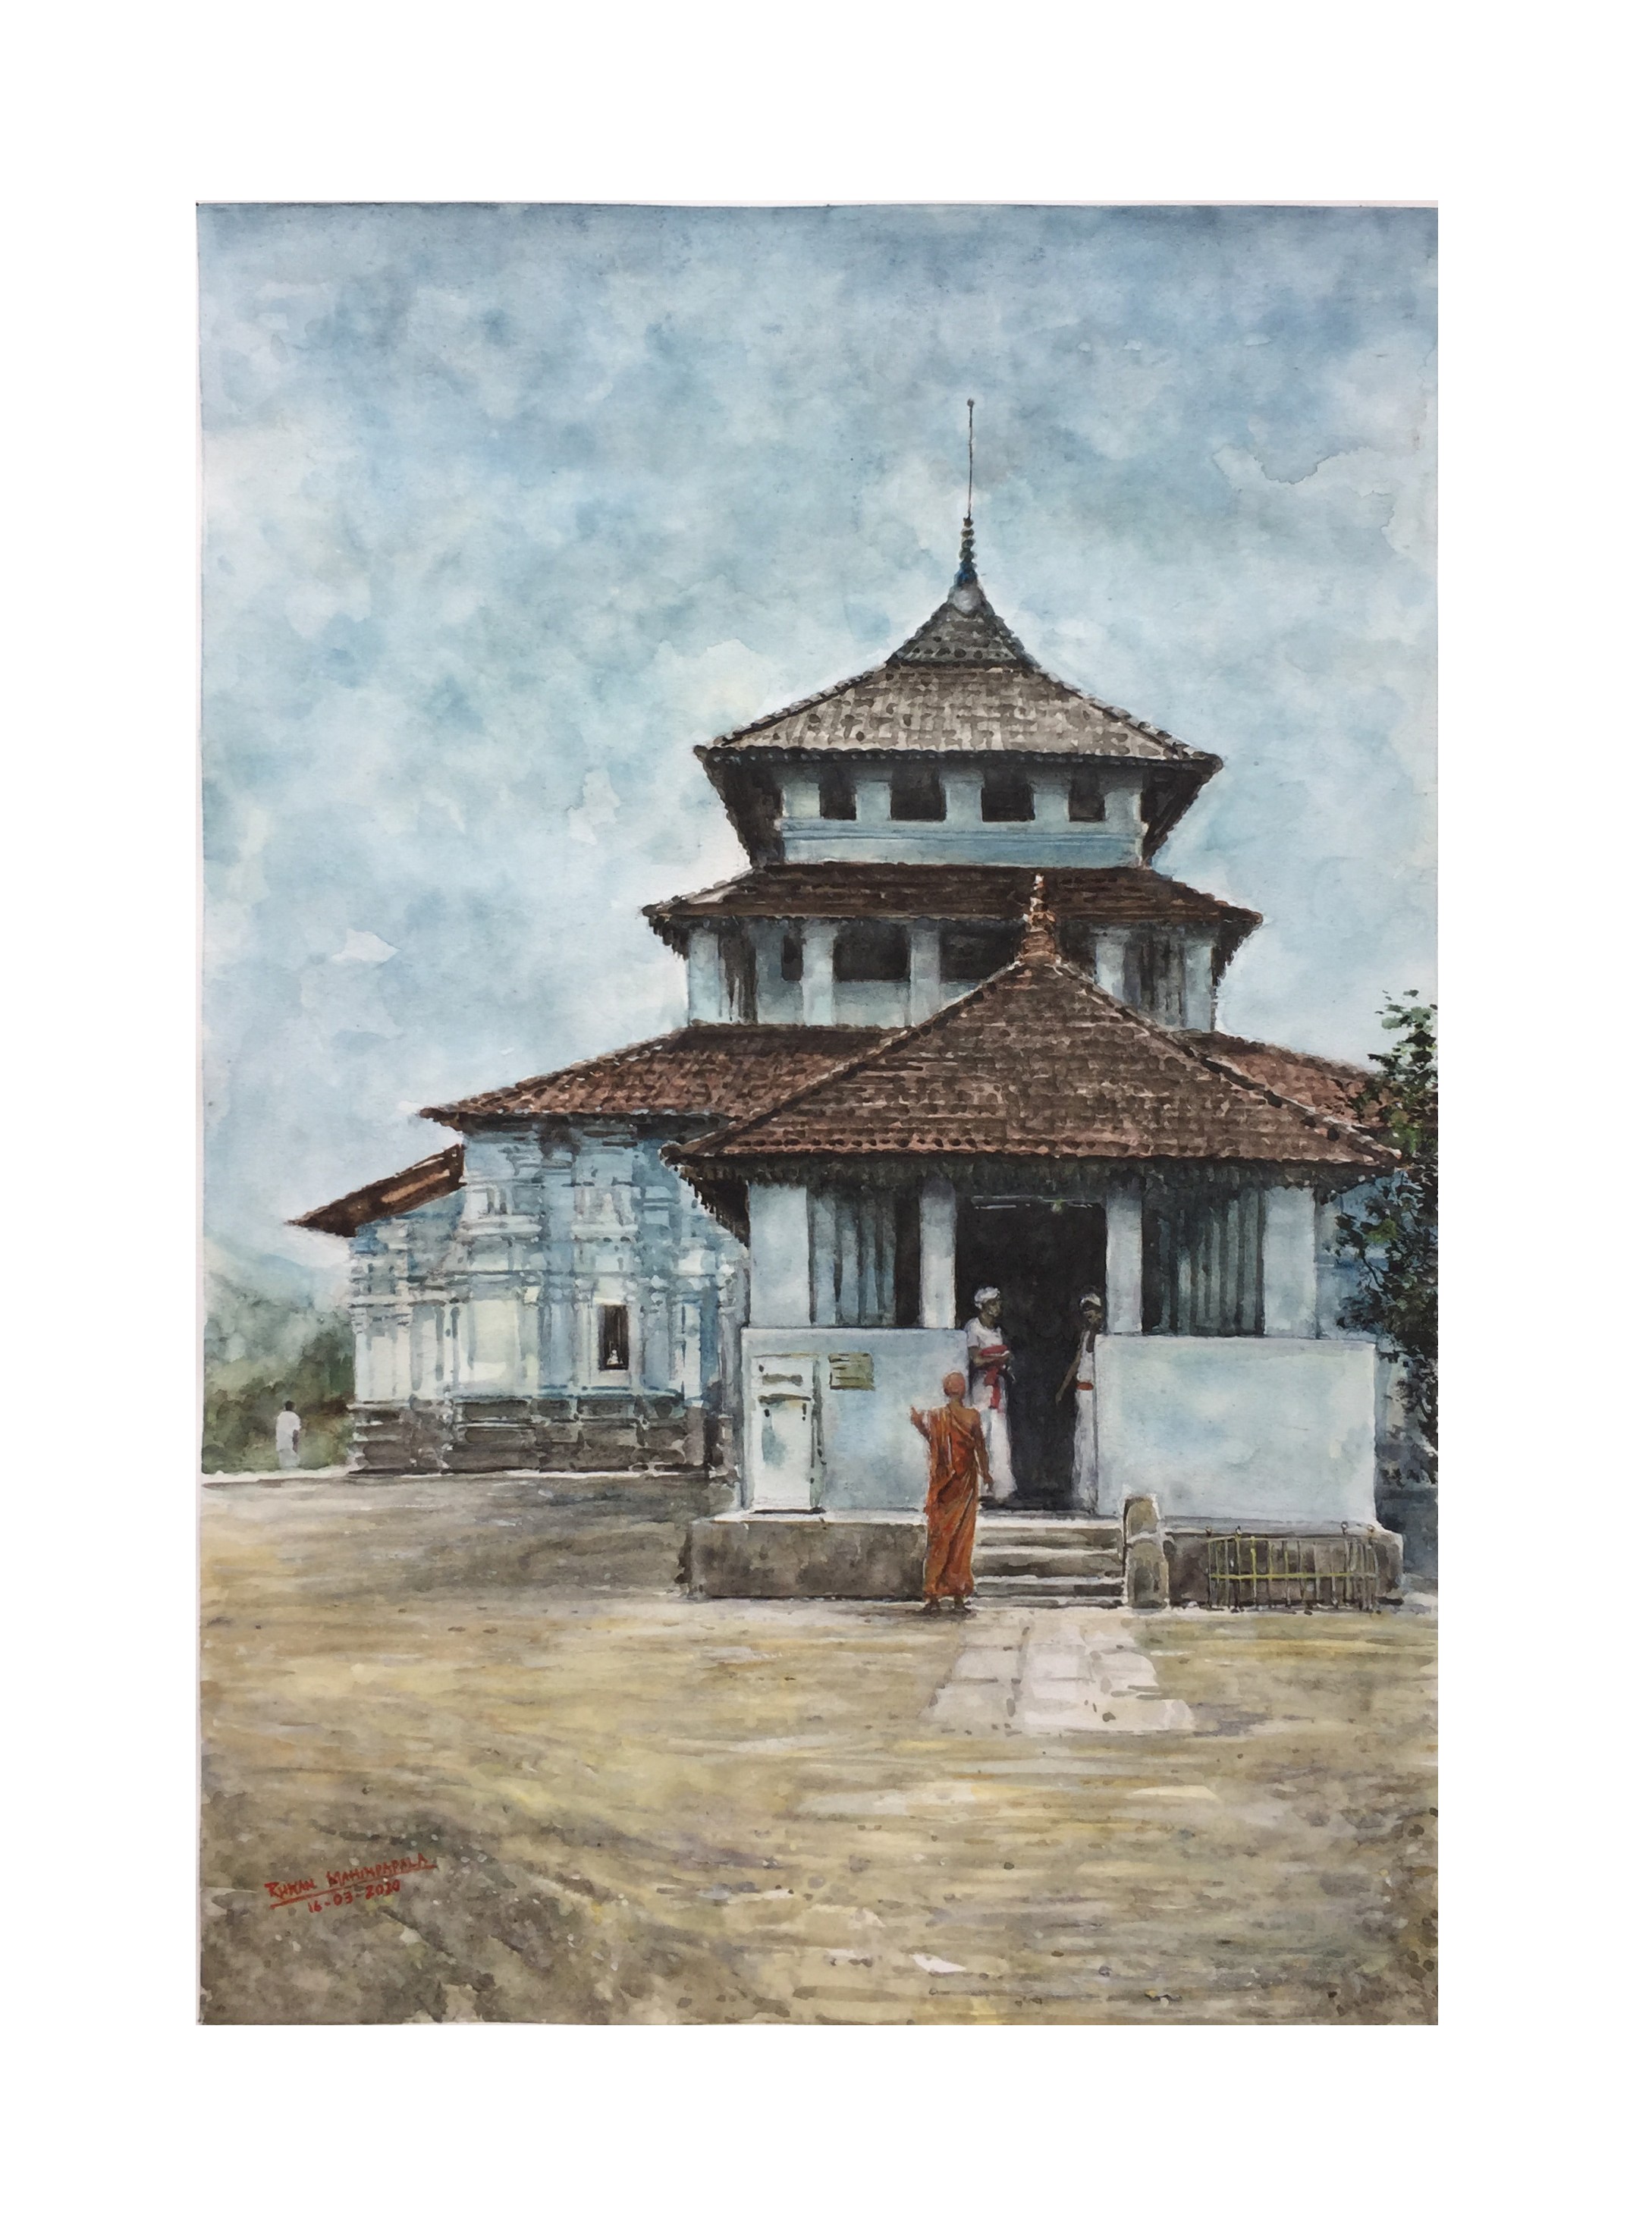 Lankathilaka Viharaya by RUWAN MAHINDAPALA